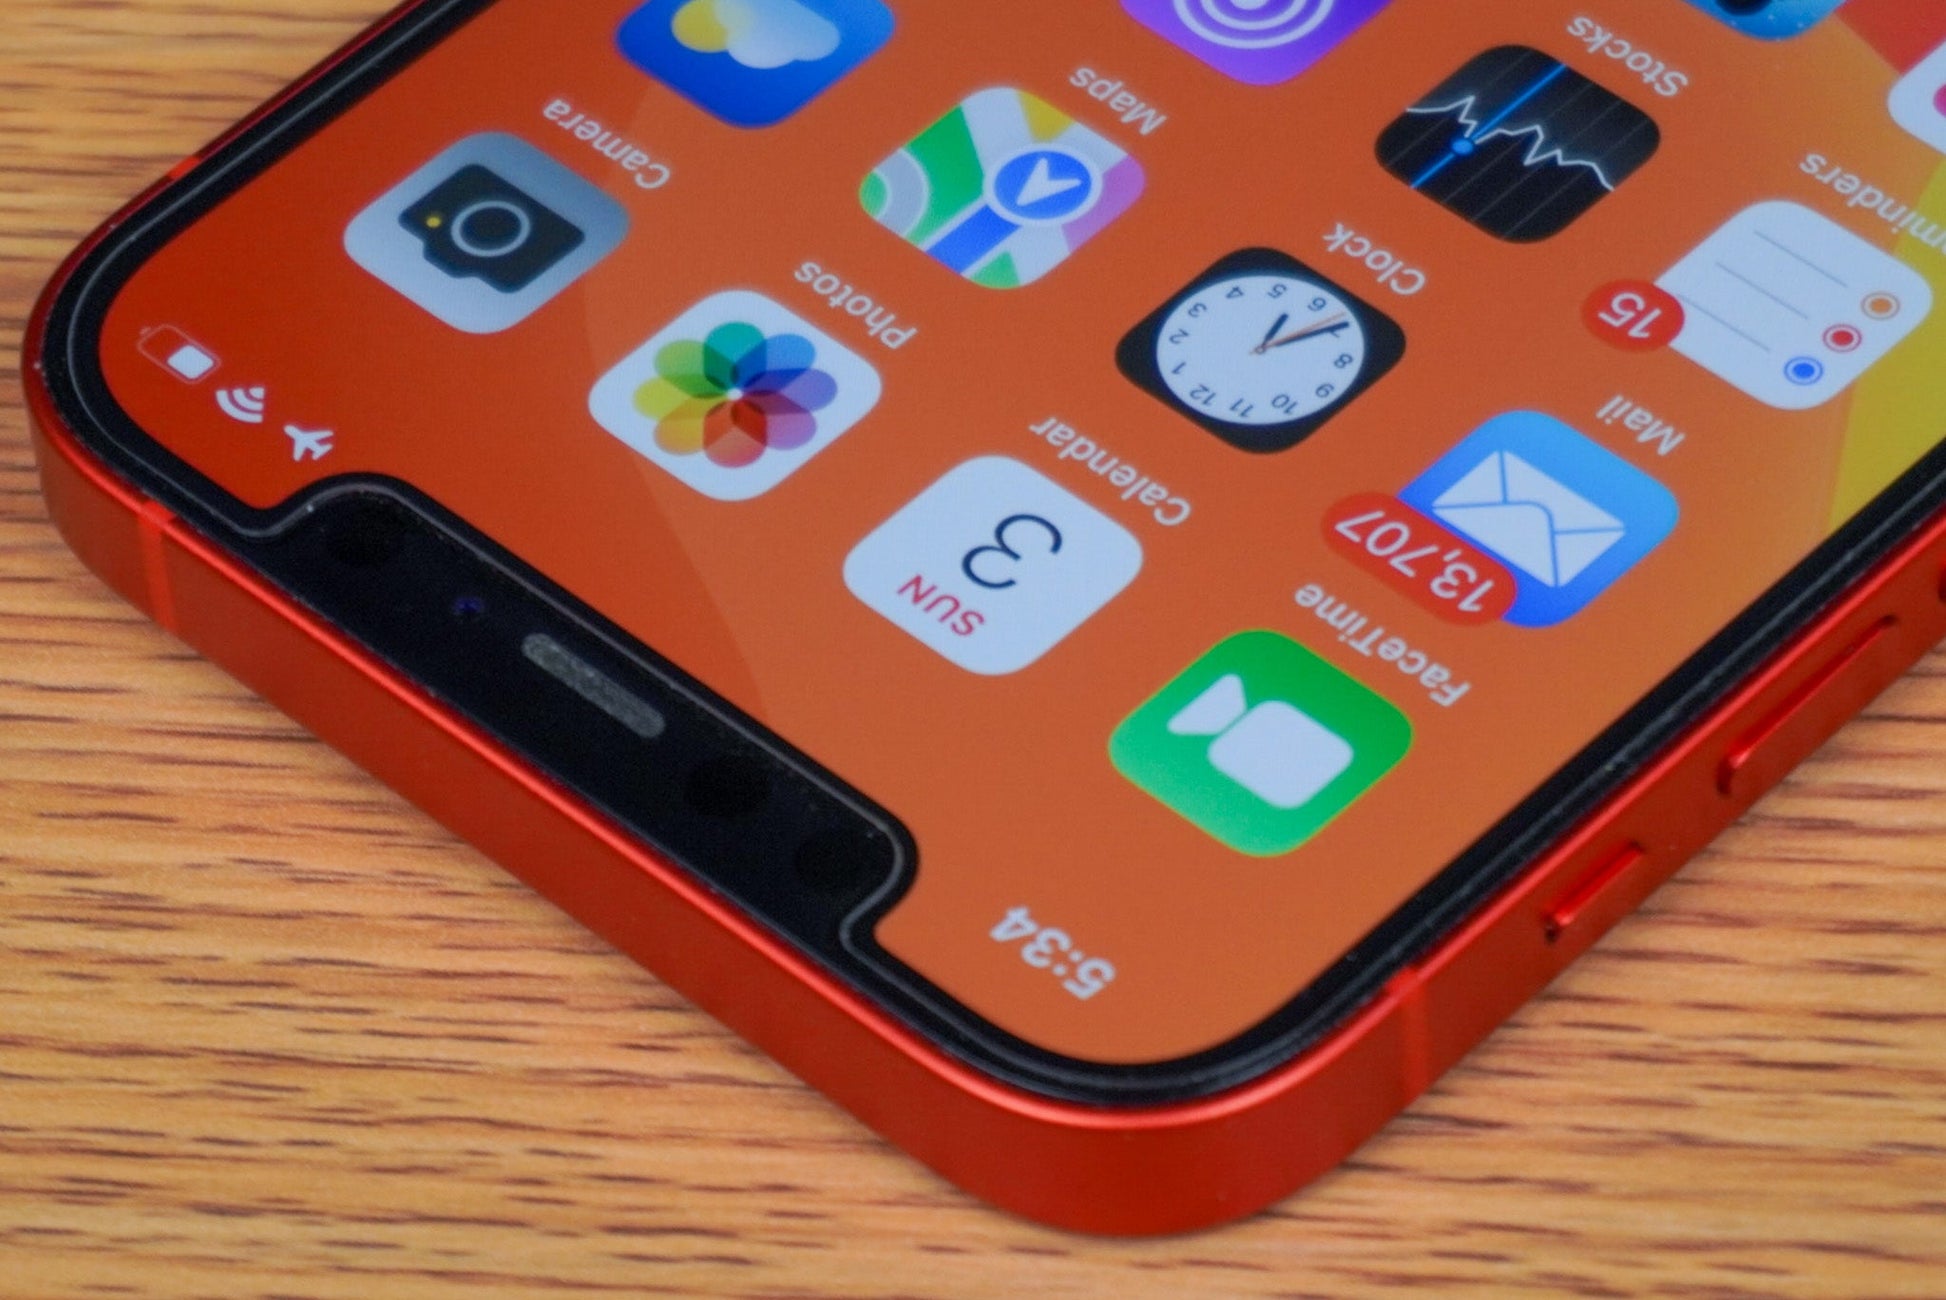 Orange Glass Case for iPhone 12 Pro Max